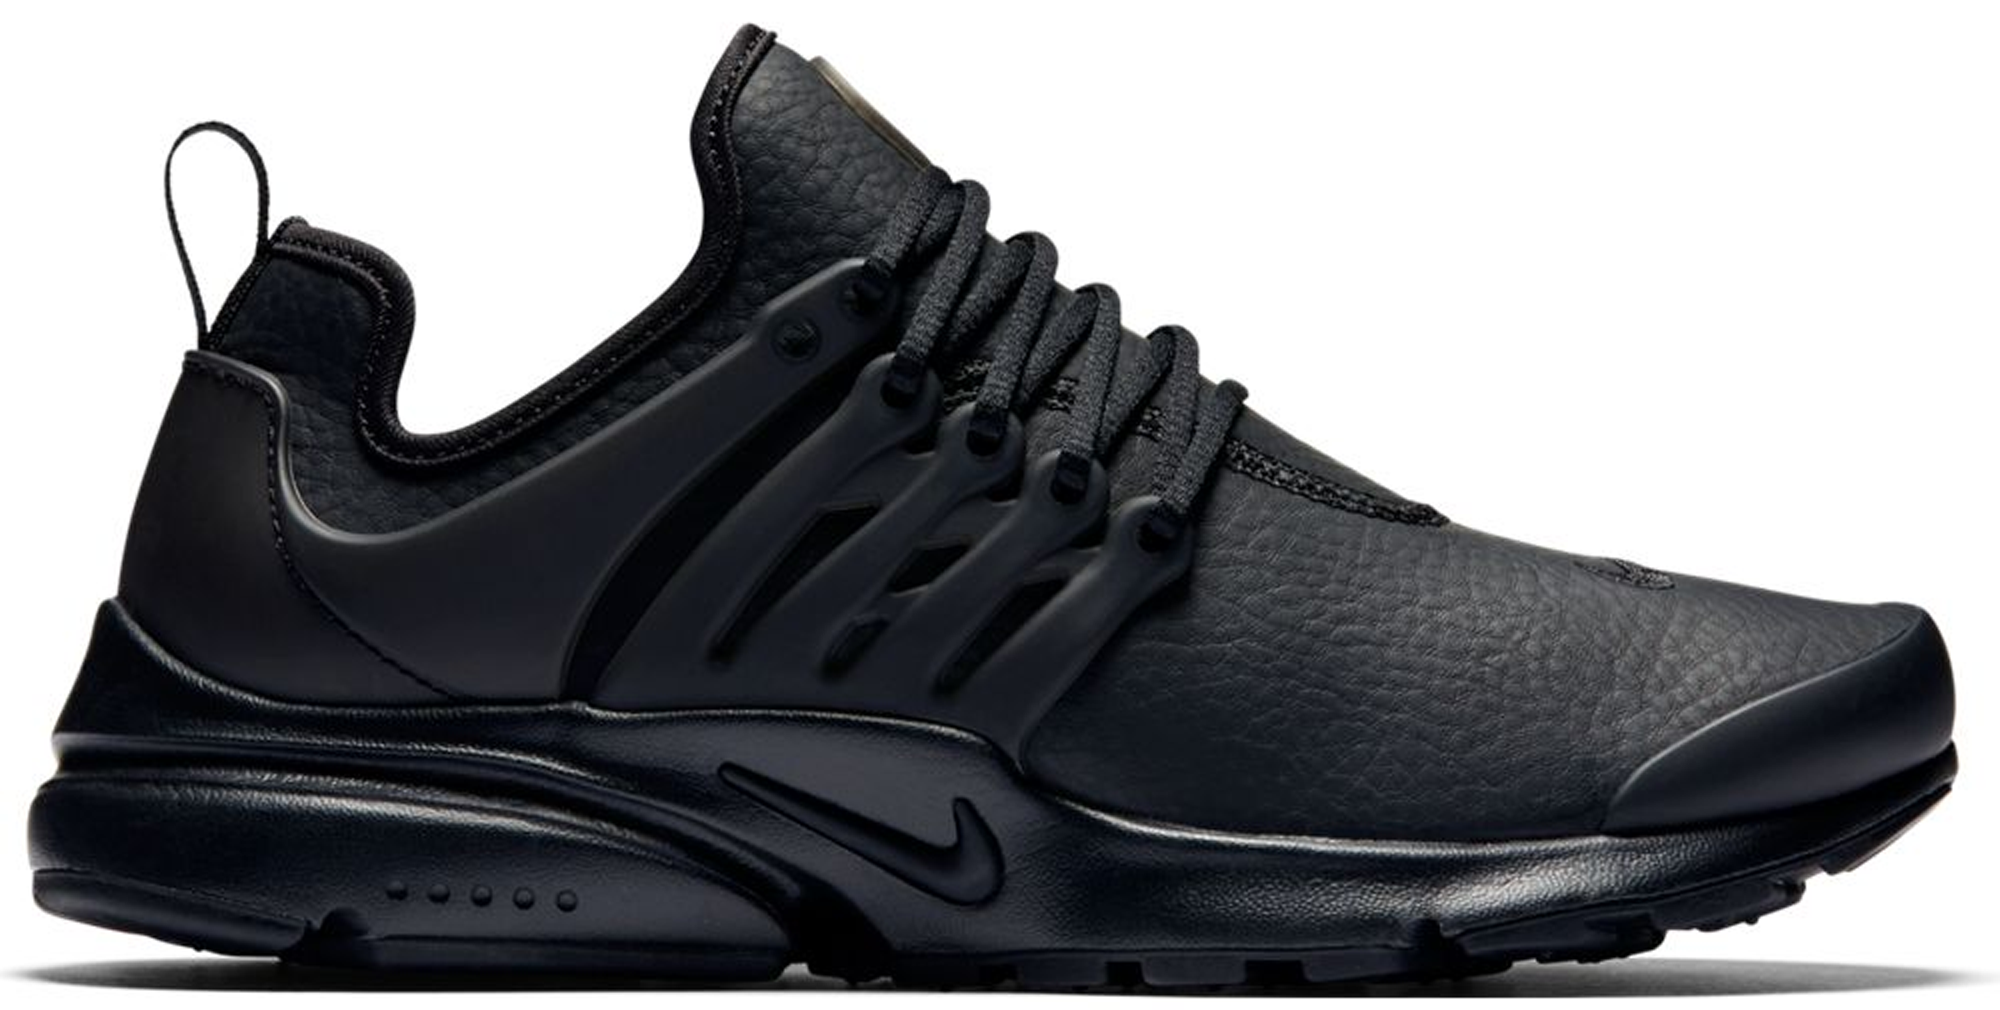 Nike Air Presto Premium Black Leather 